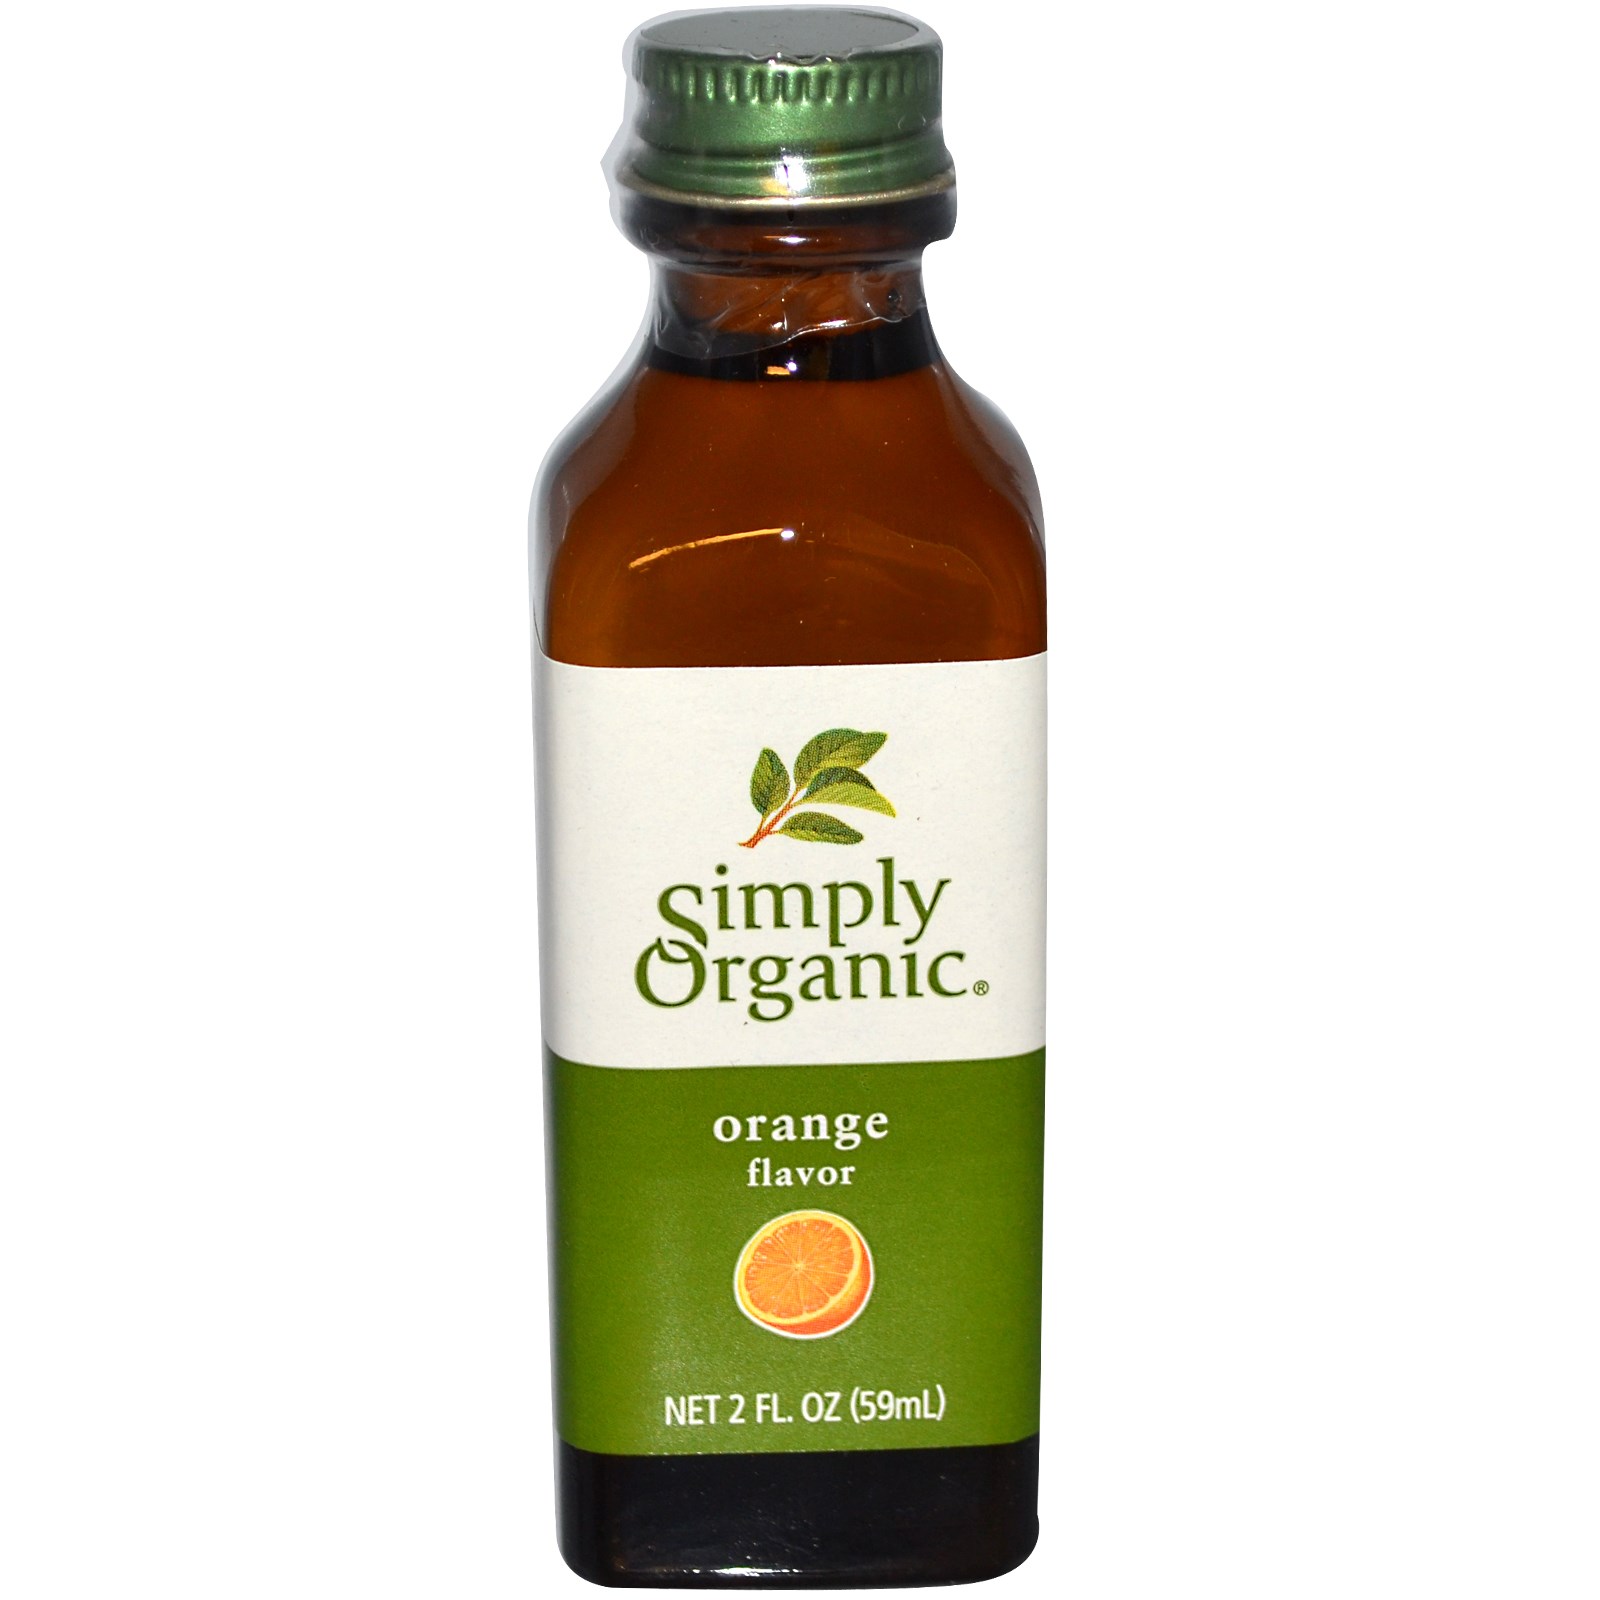 Simply Organic Flavor美国桔香葵花籽香精食用油香橙香精 Orange